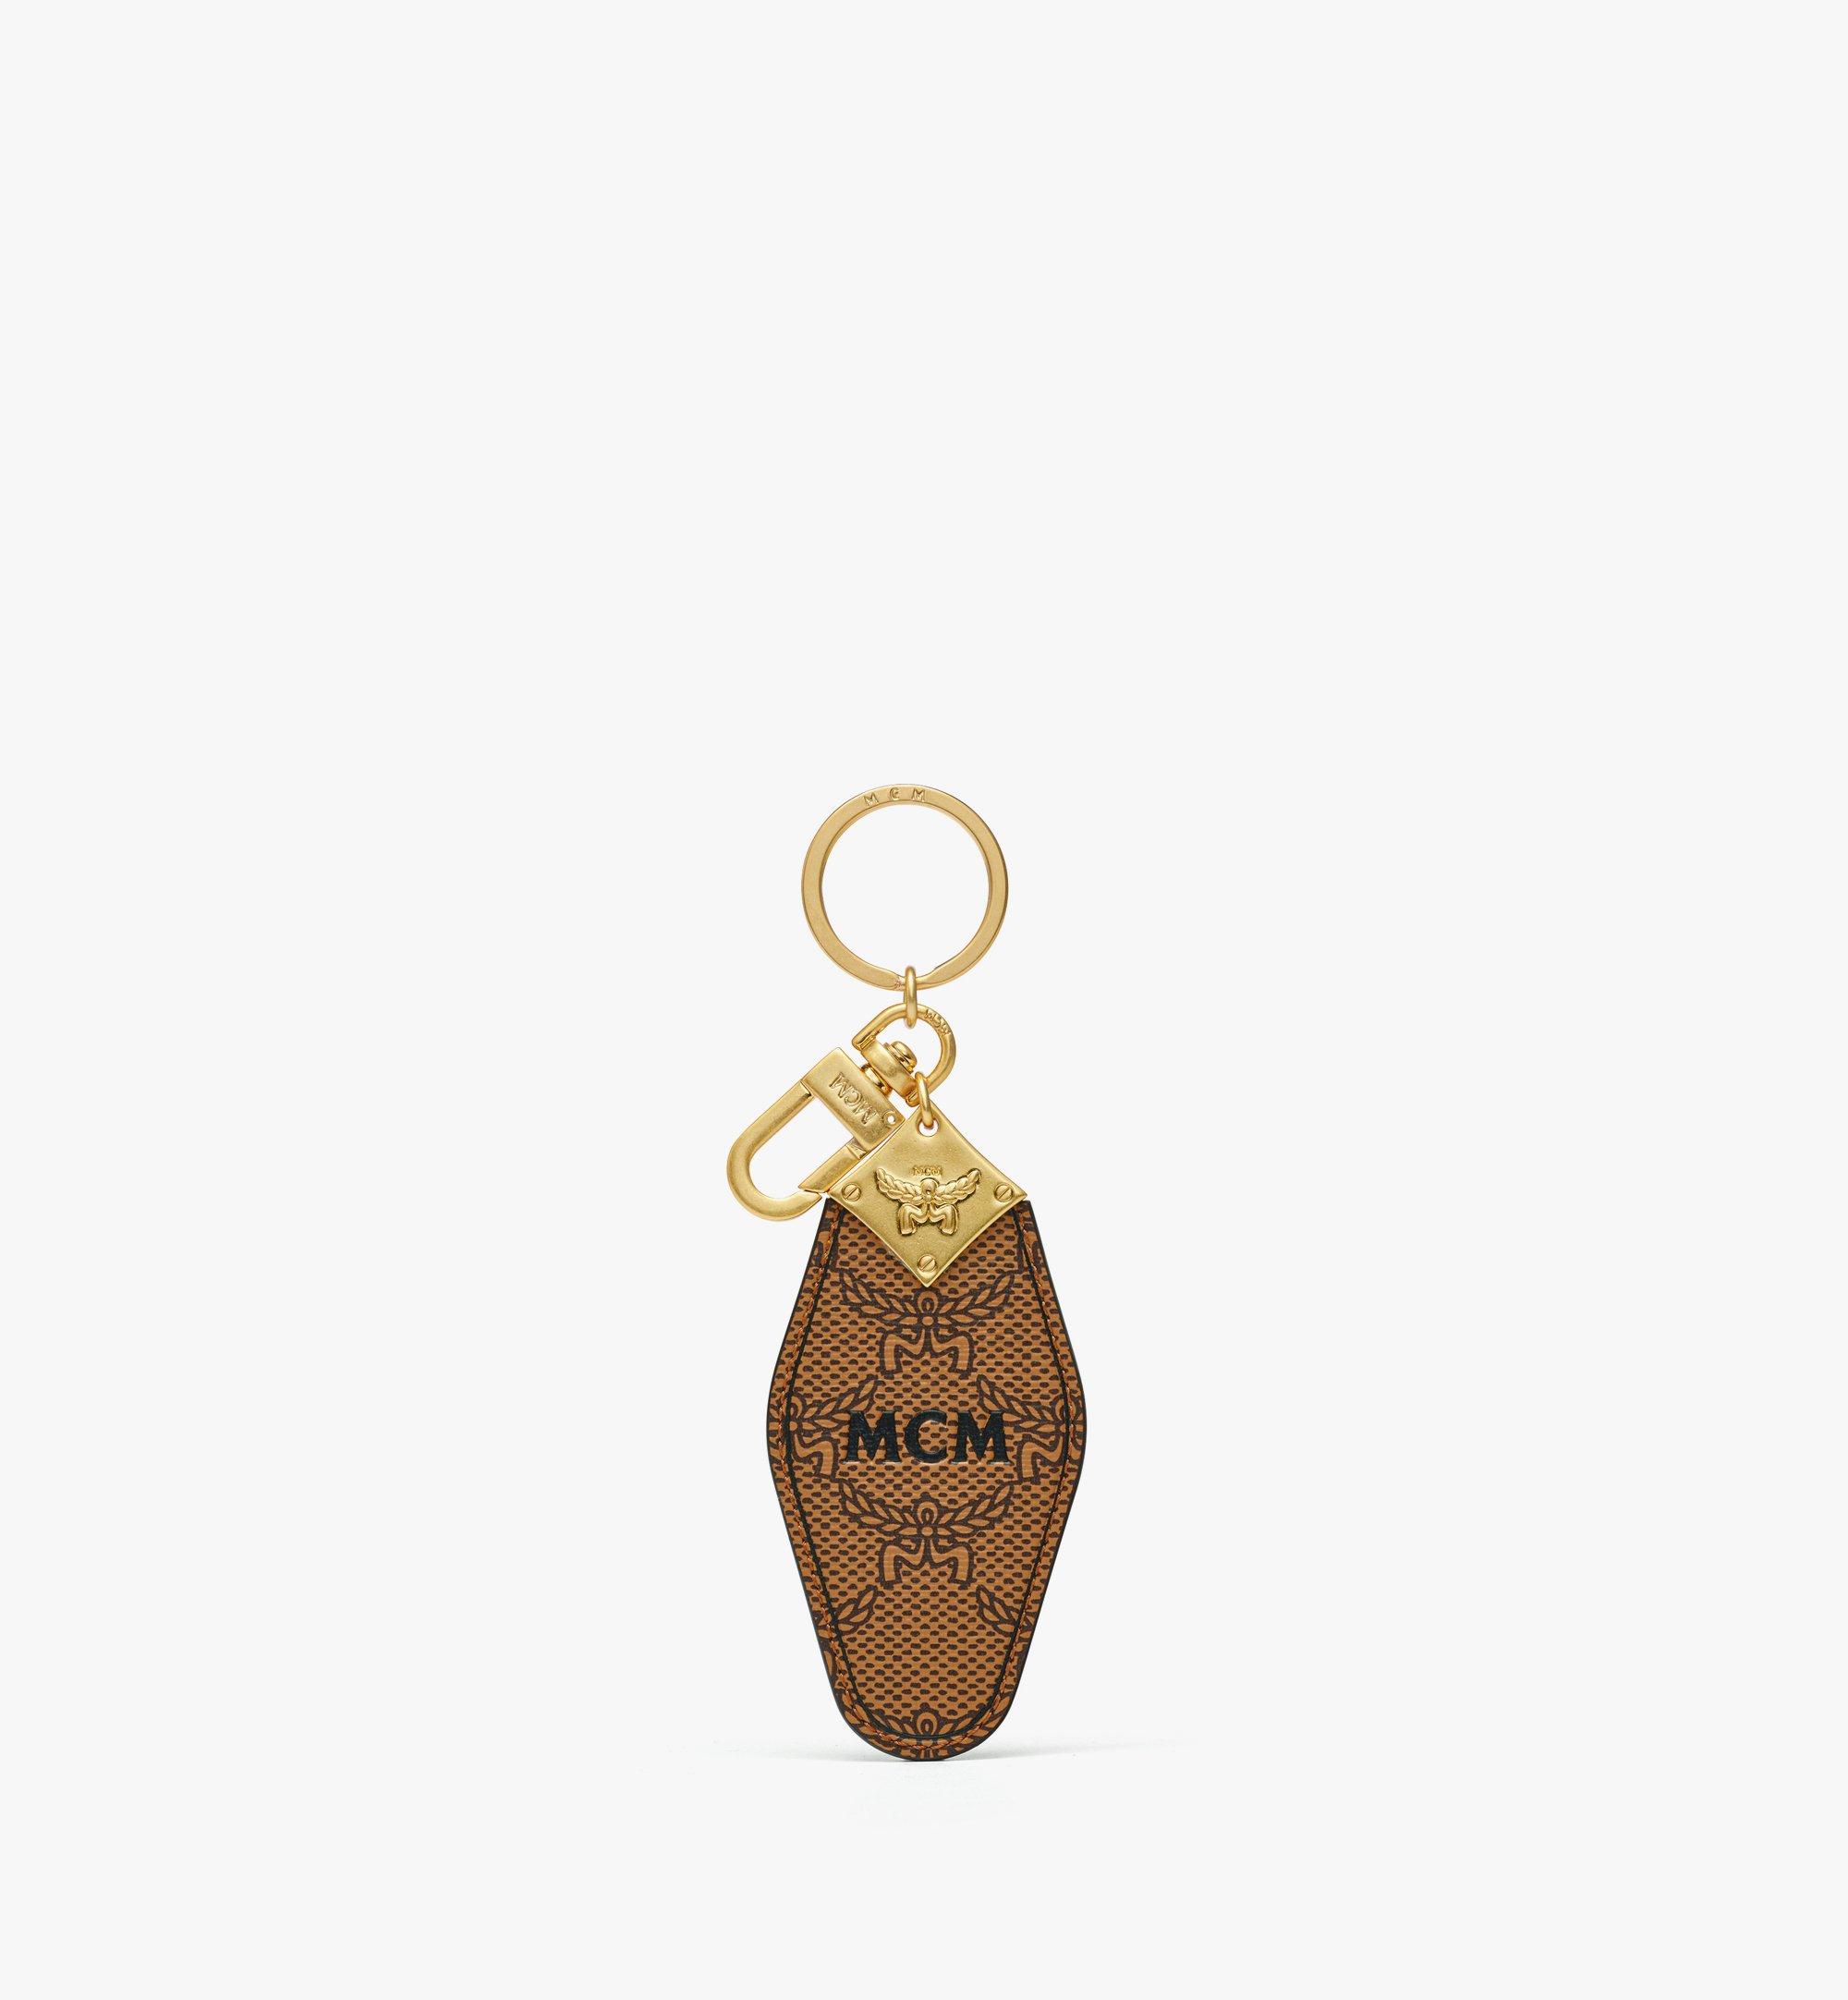 MCM Mini Backpack Key Chain - $275 - From Emily